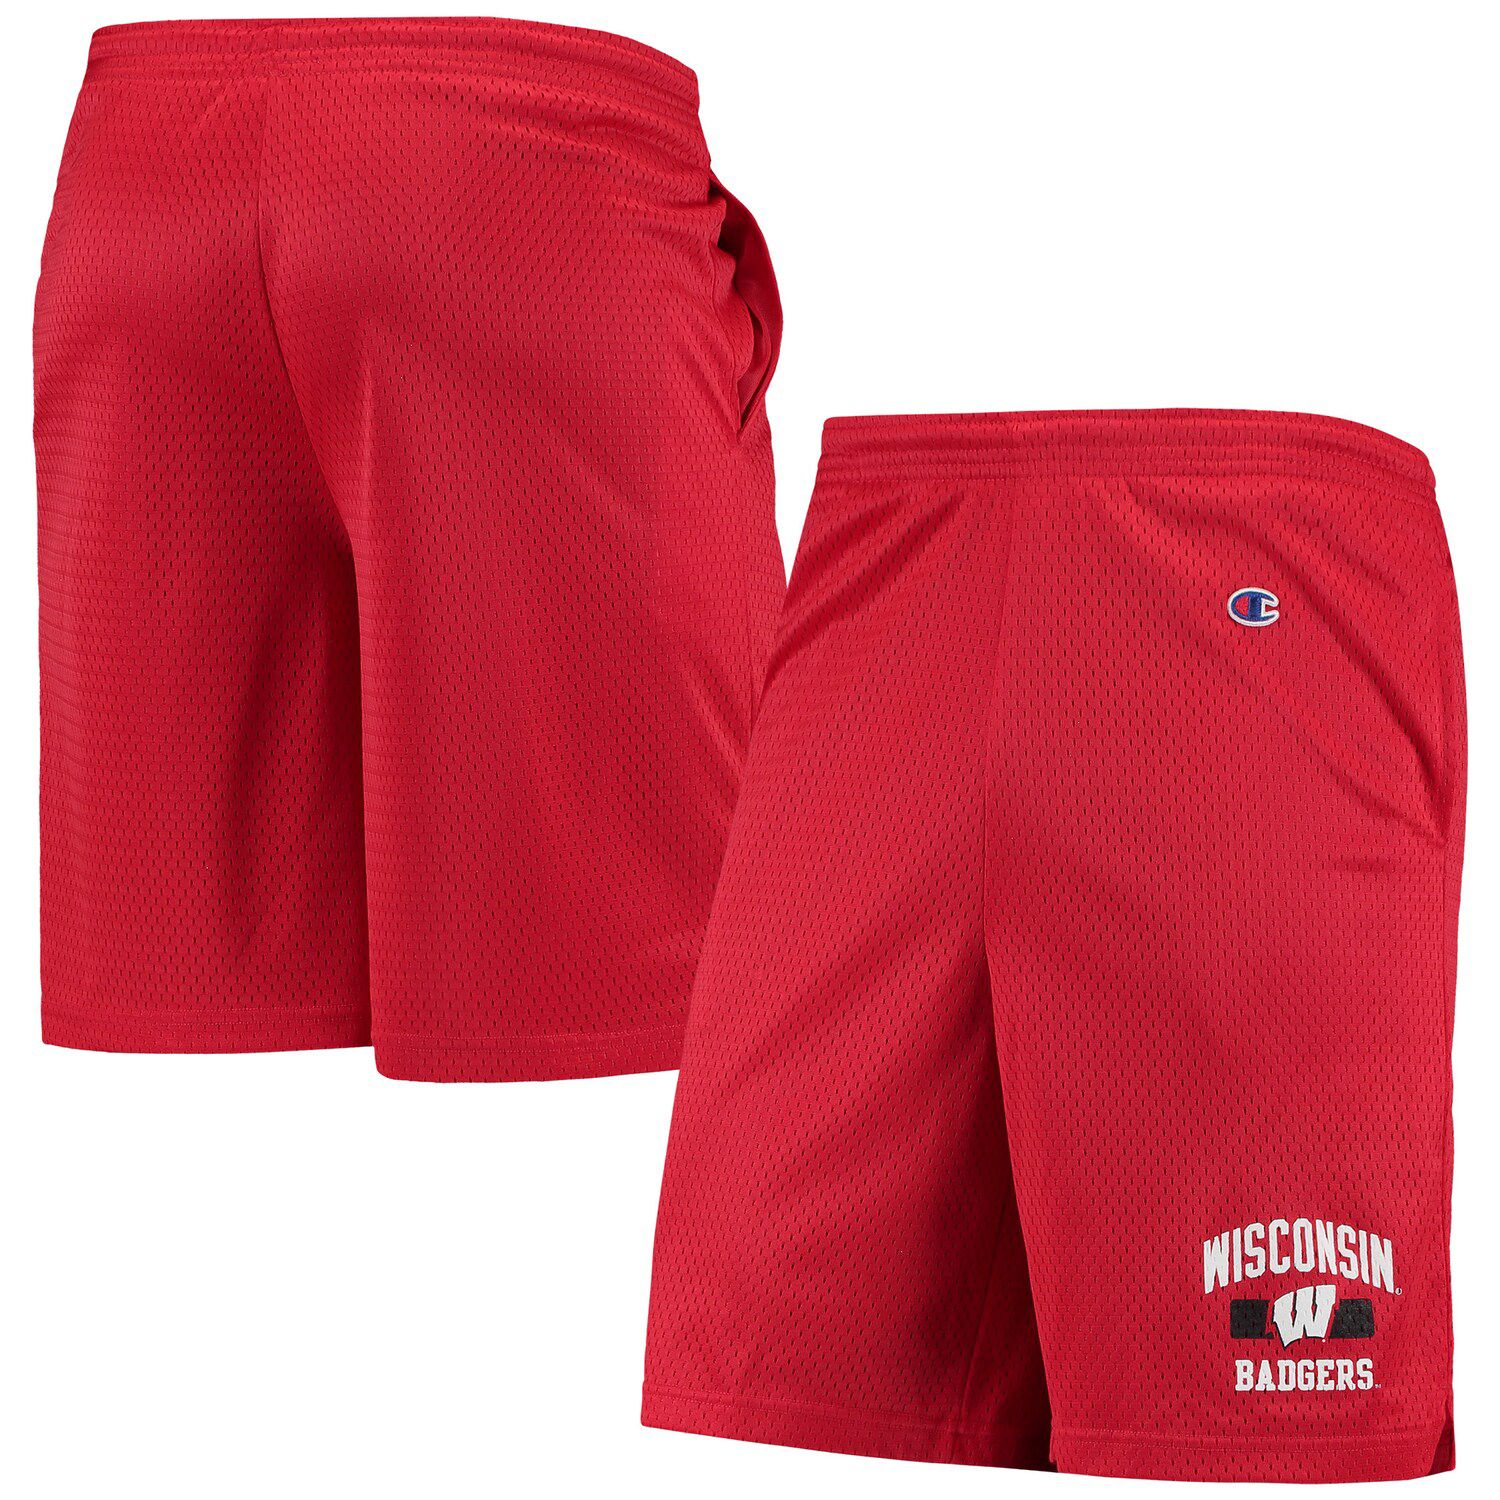 red champion shorts